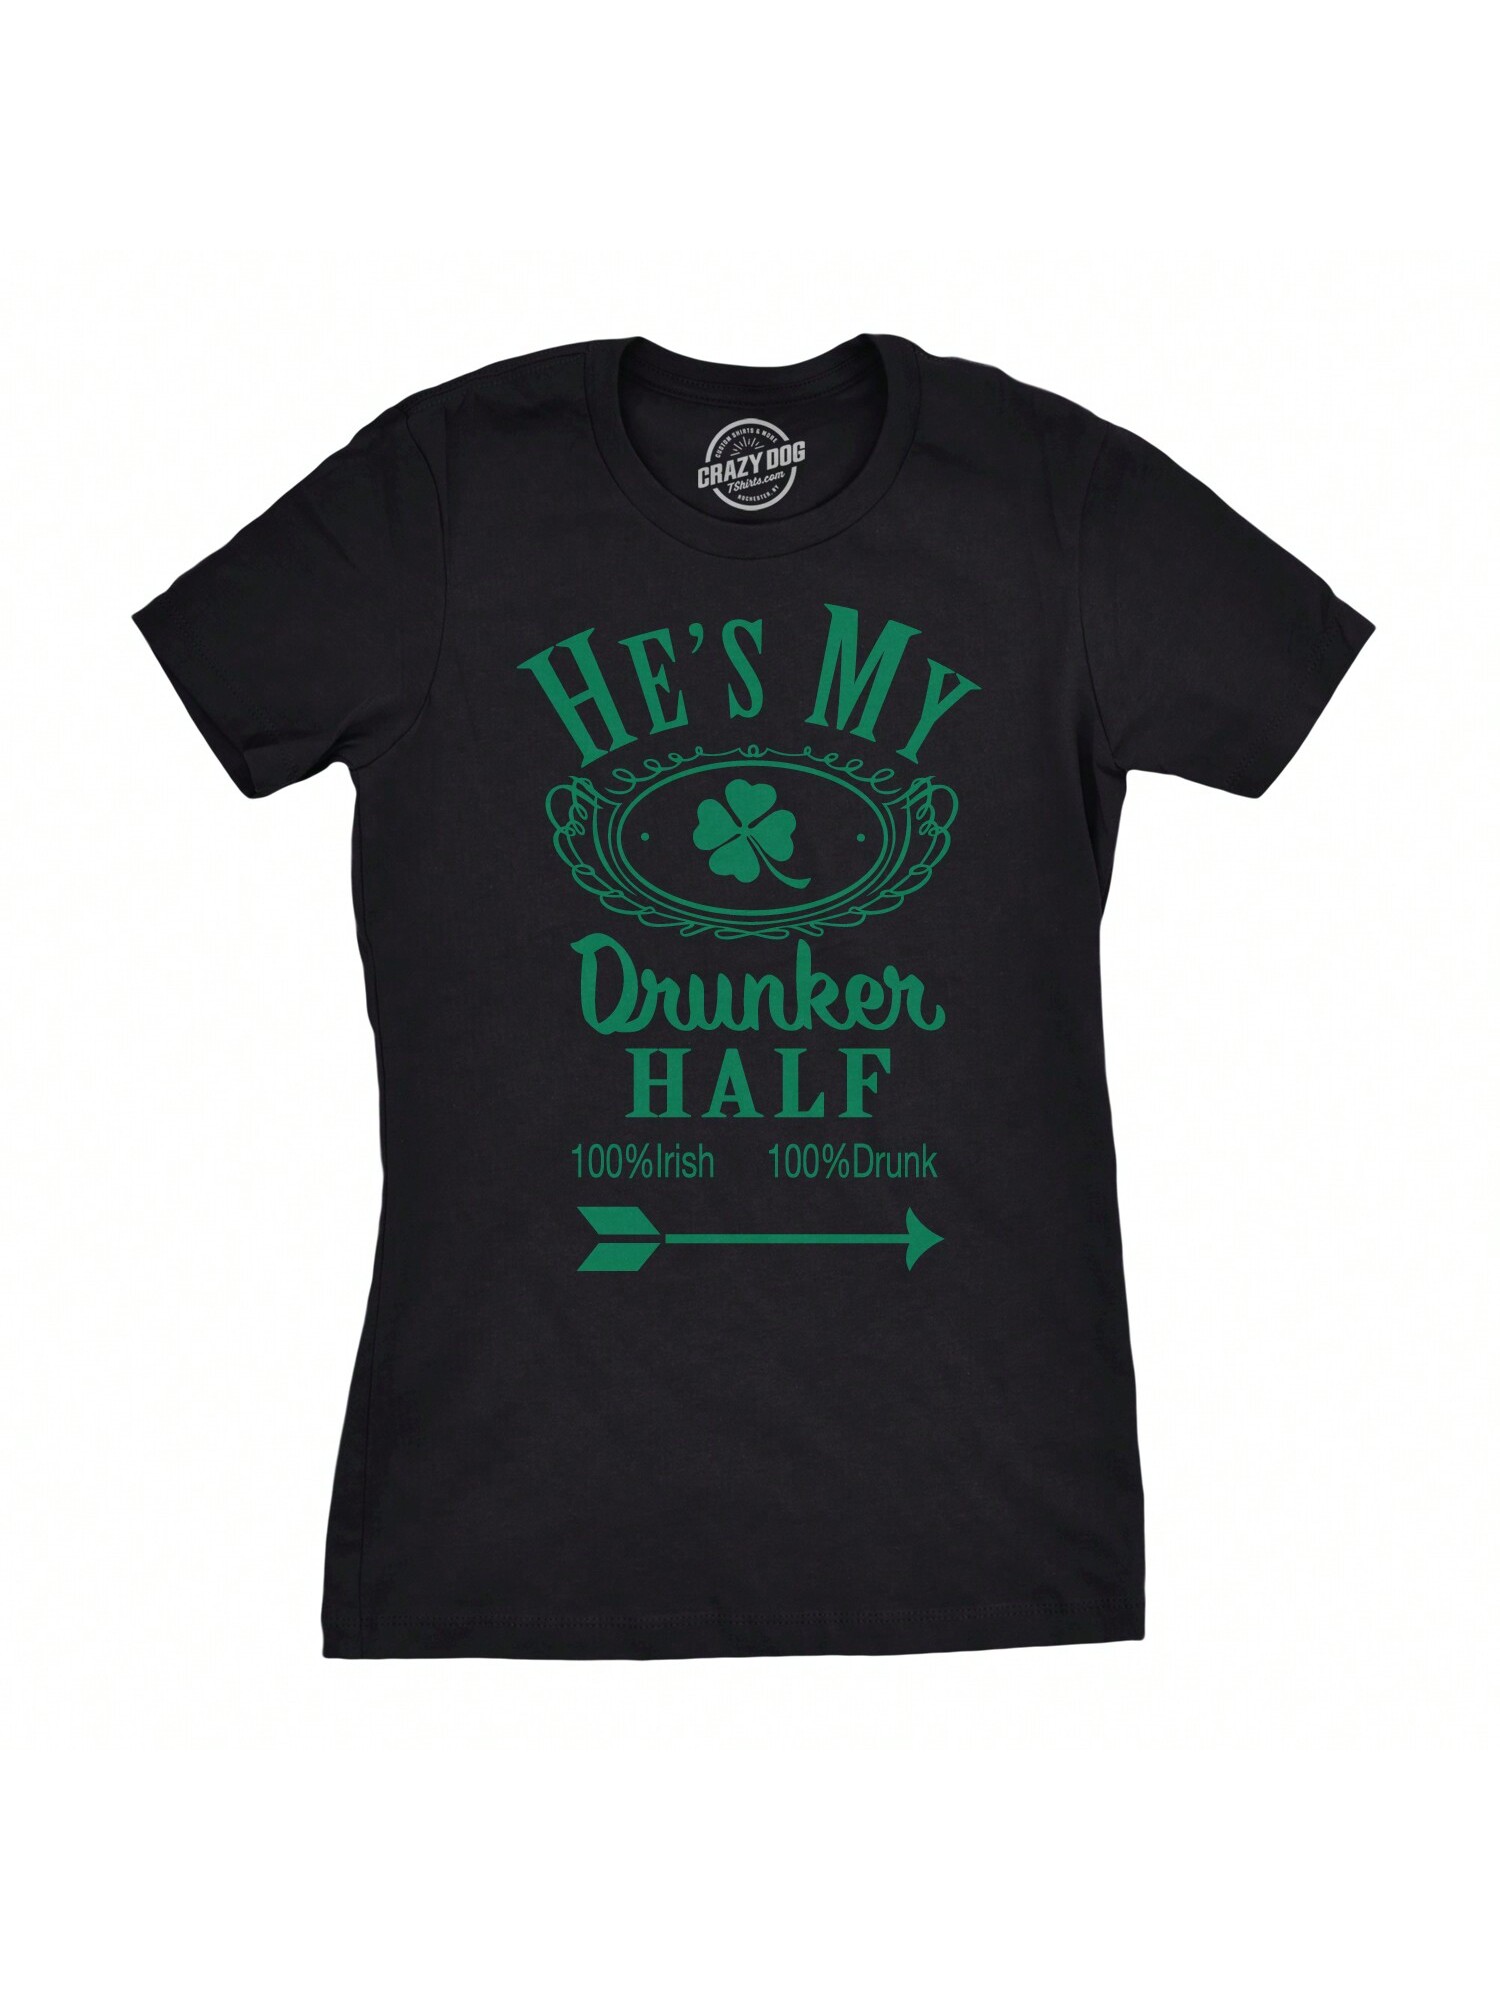 Shes My Drunker Half Funny Футболка Saint Patty's с рисунком трилистника ко Дню Святого Патрика (зеленая) - S, хизер блэк - он